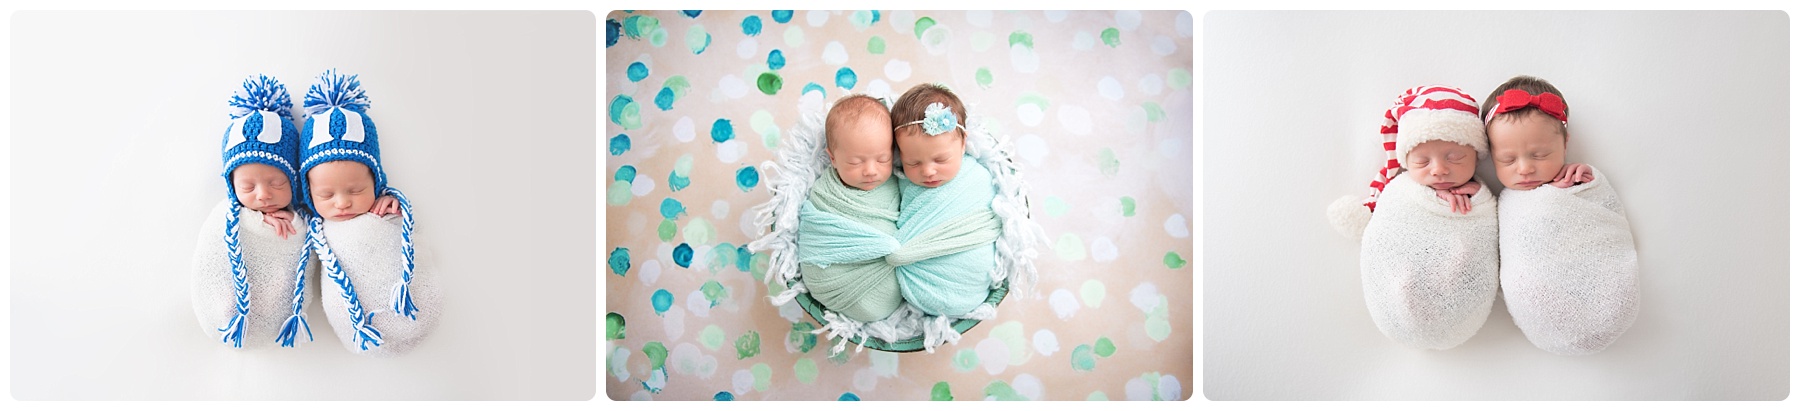 newborn twins laying in a bucket